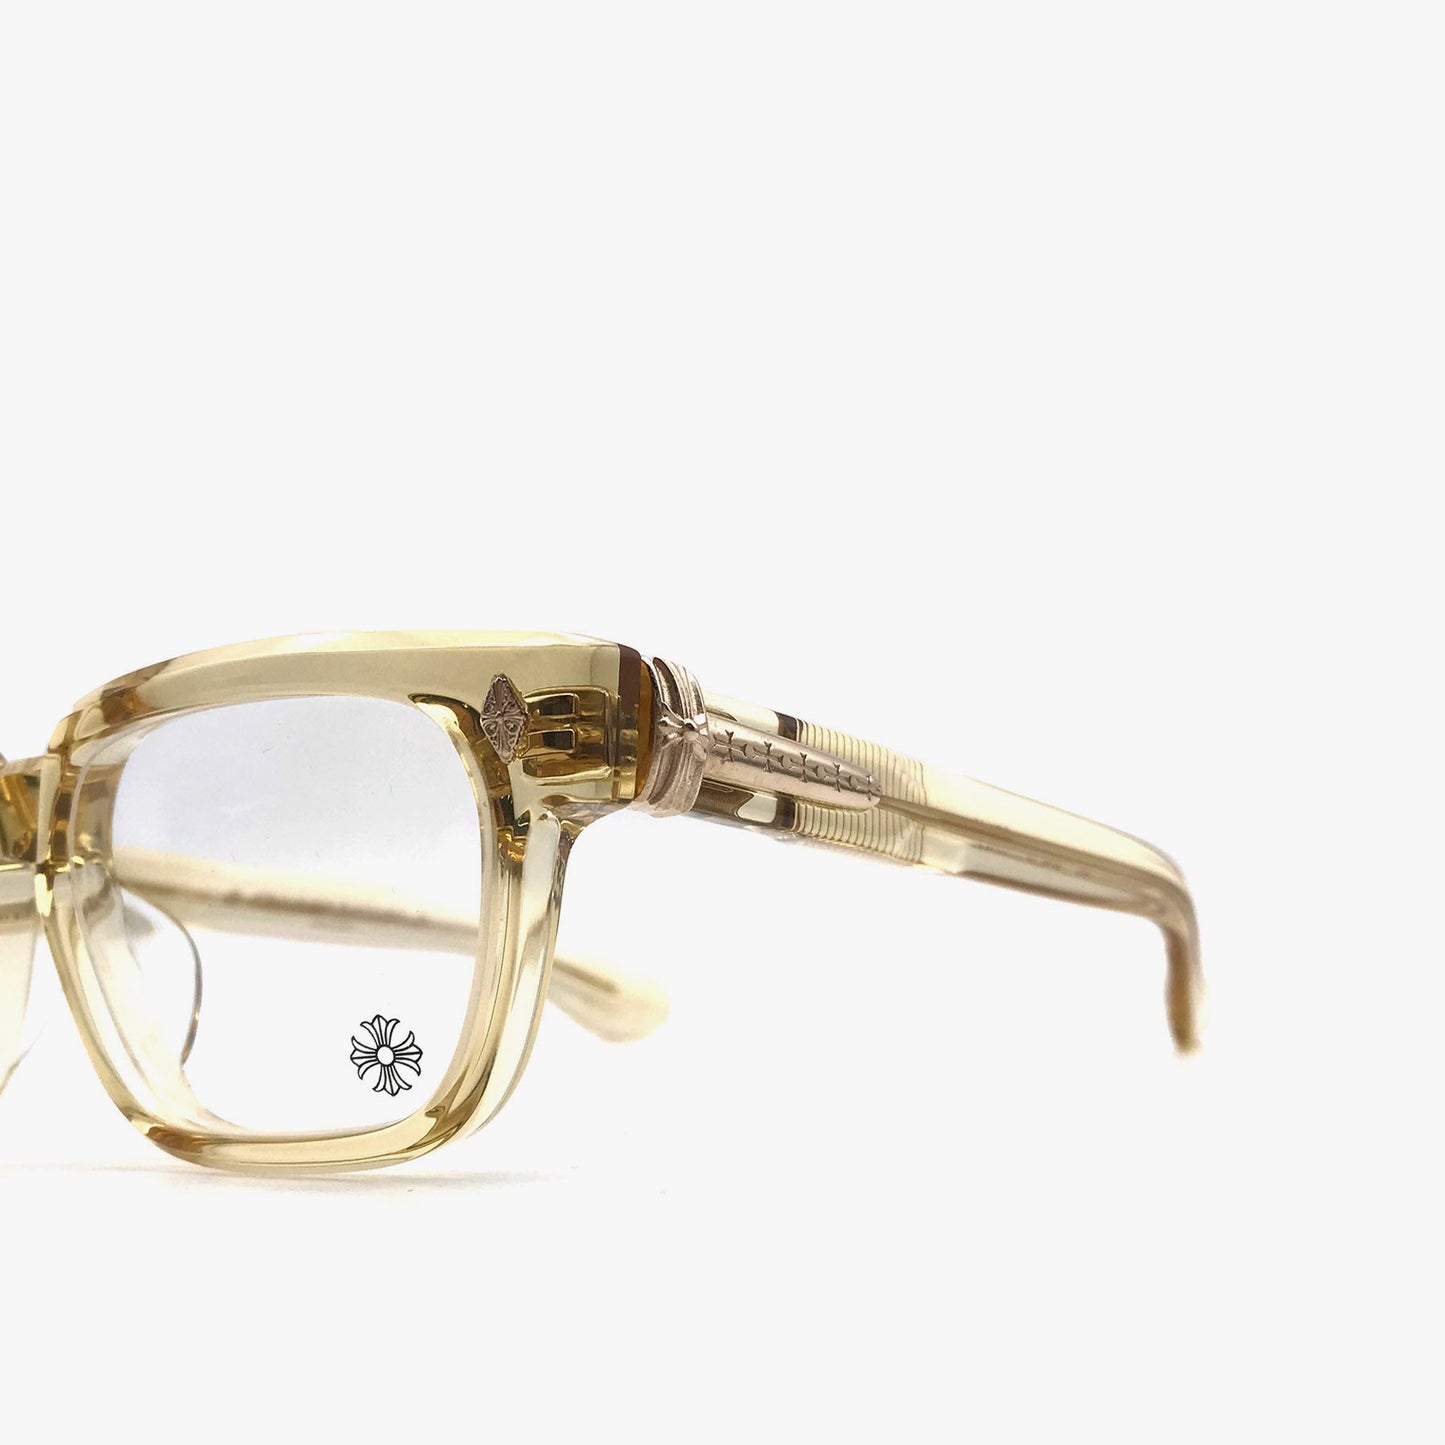 Chrome Hearts PEN 15 Glasses Frame - SHENGLI ROAD MARKET